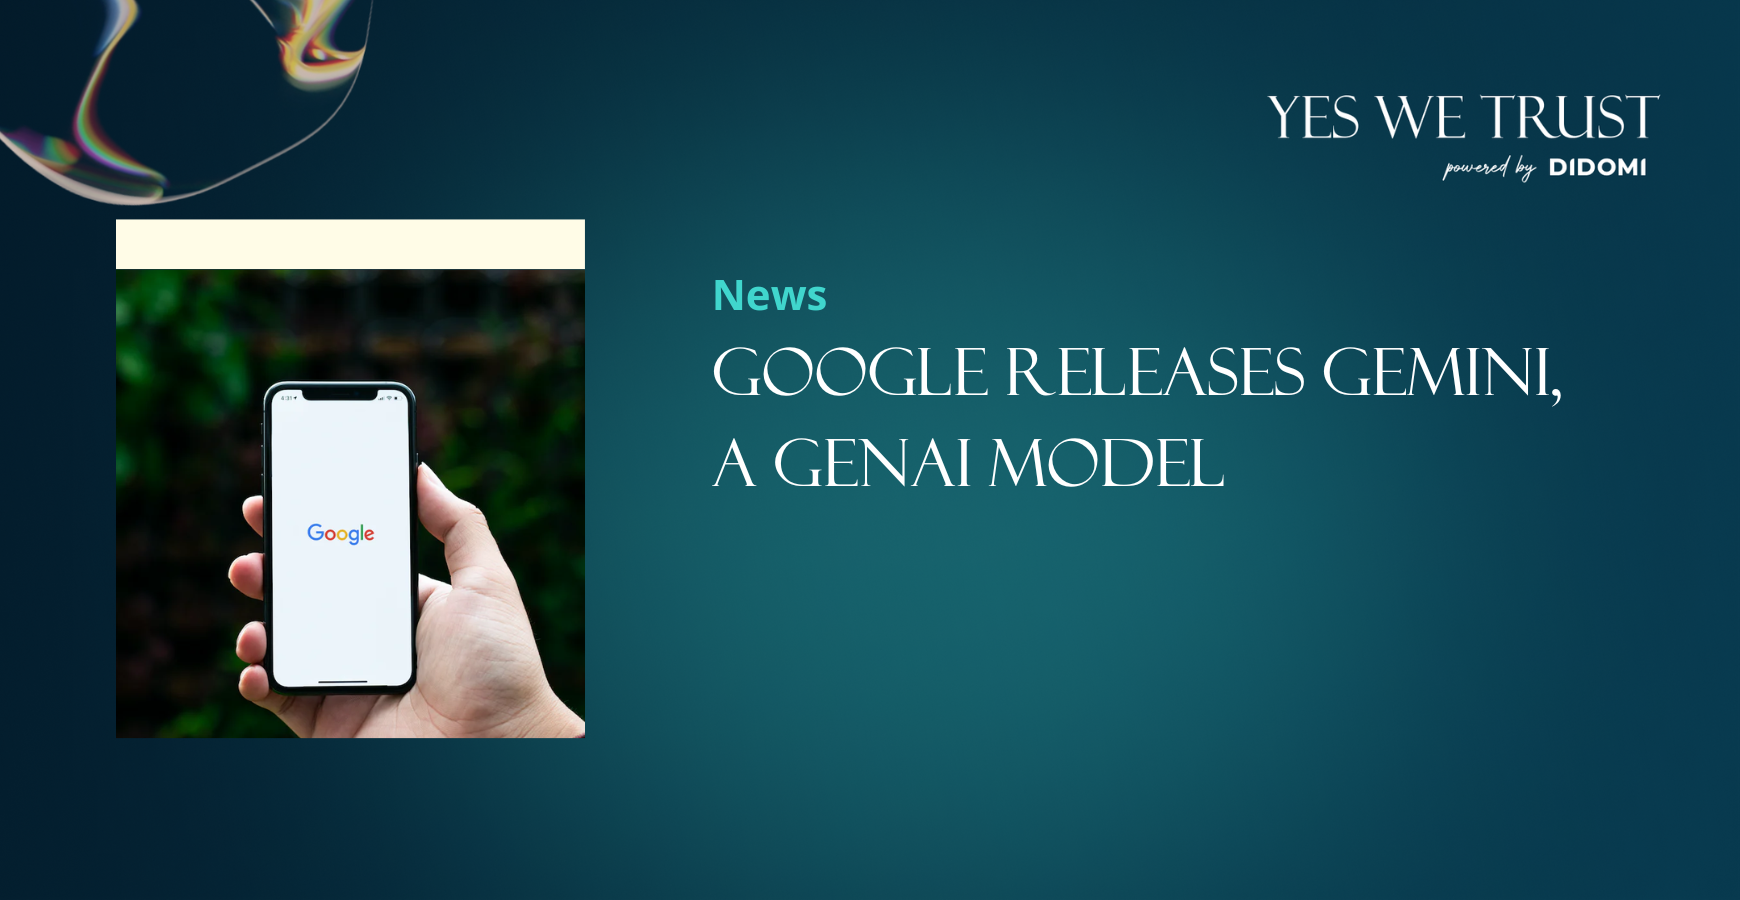 Google releases Gemini, a GenAI model